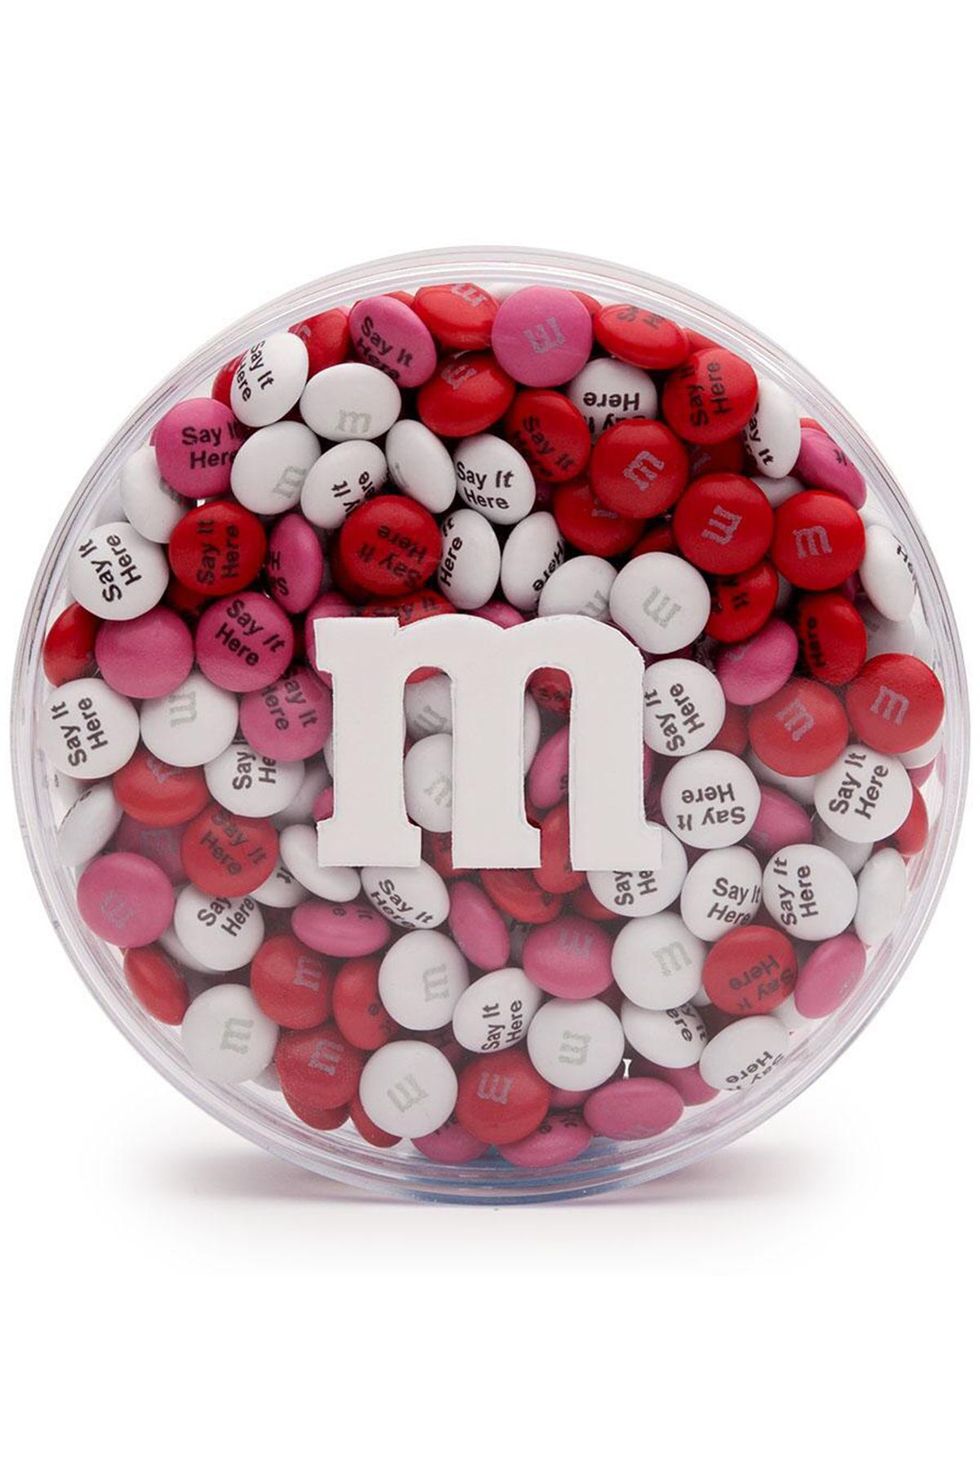 Personalizable M&M’S Round Gift Box